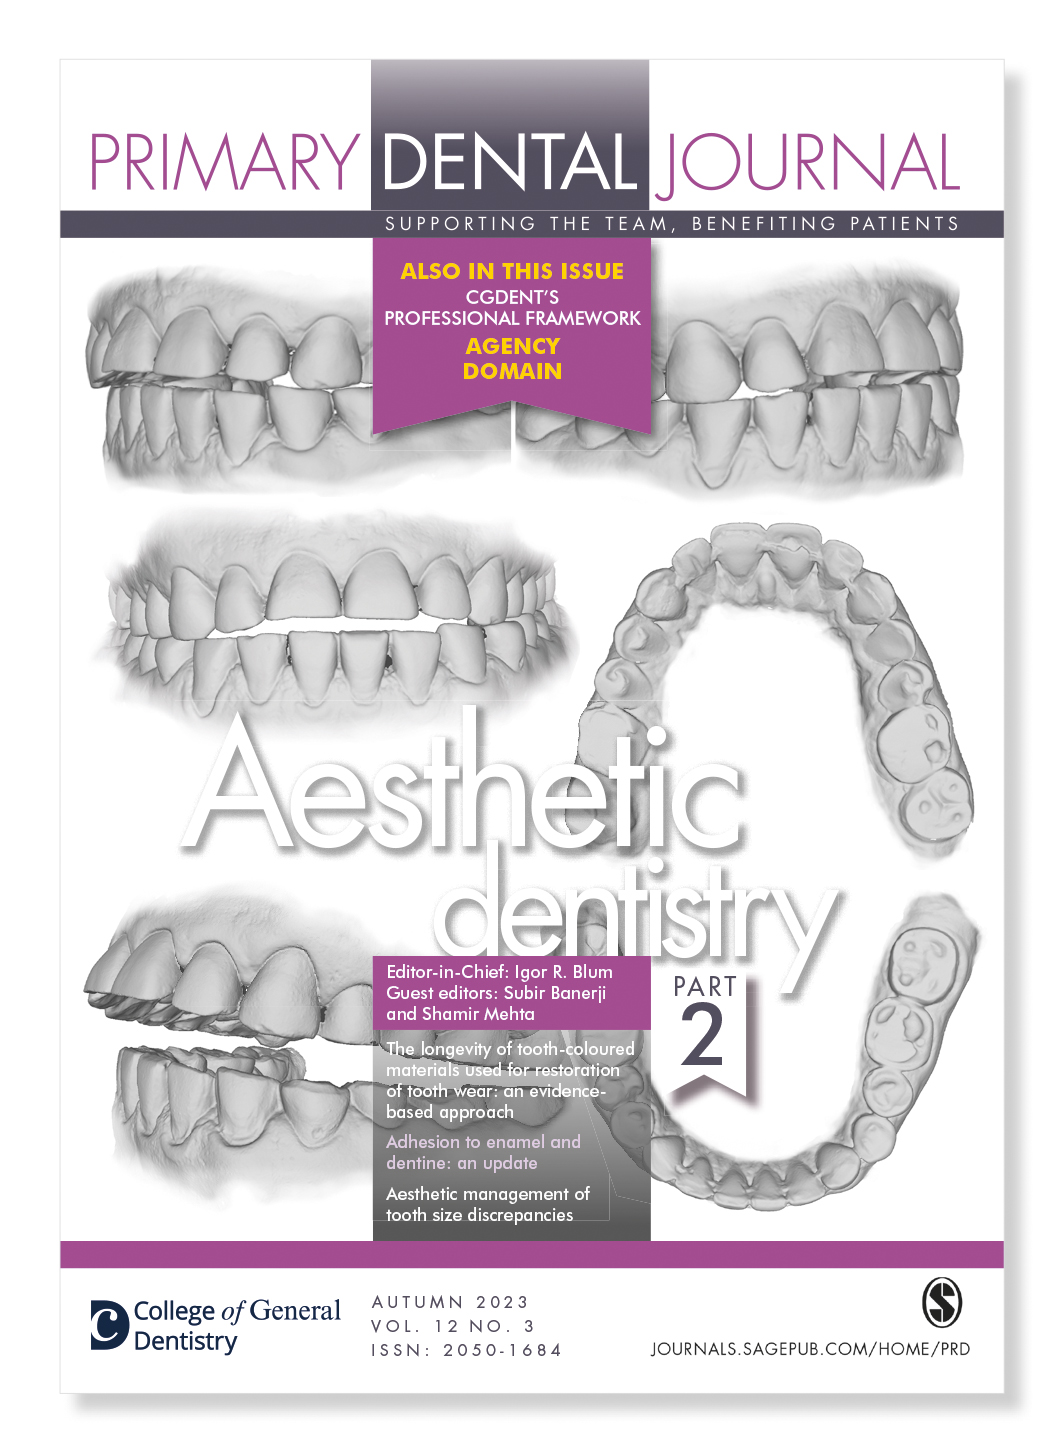 New PDJ online: Aesthetic dentistry, part 2